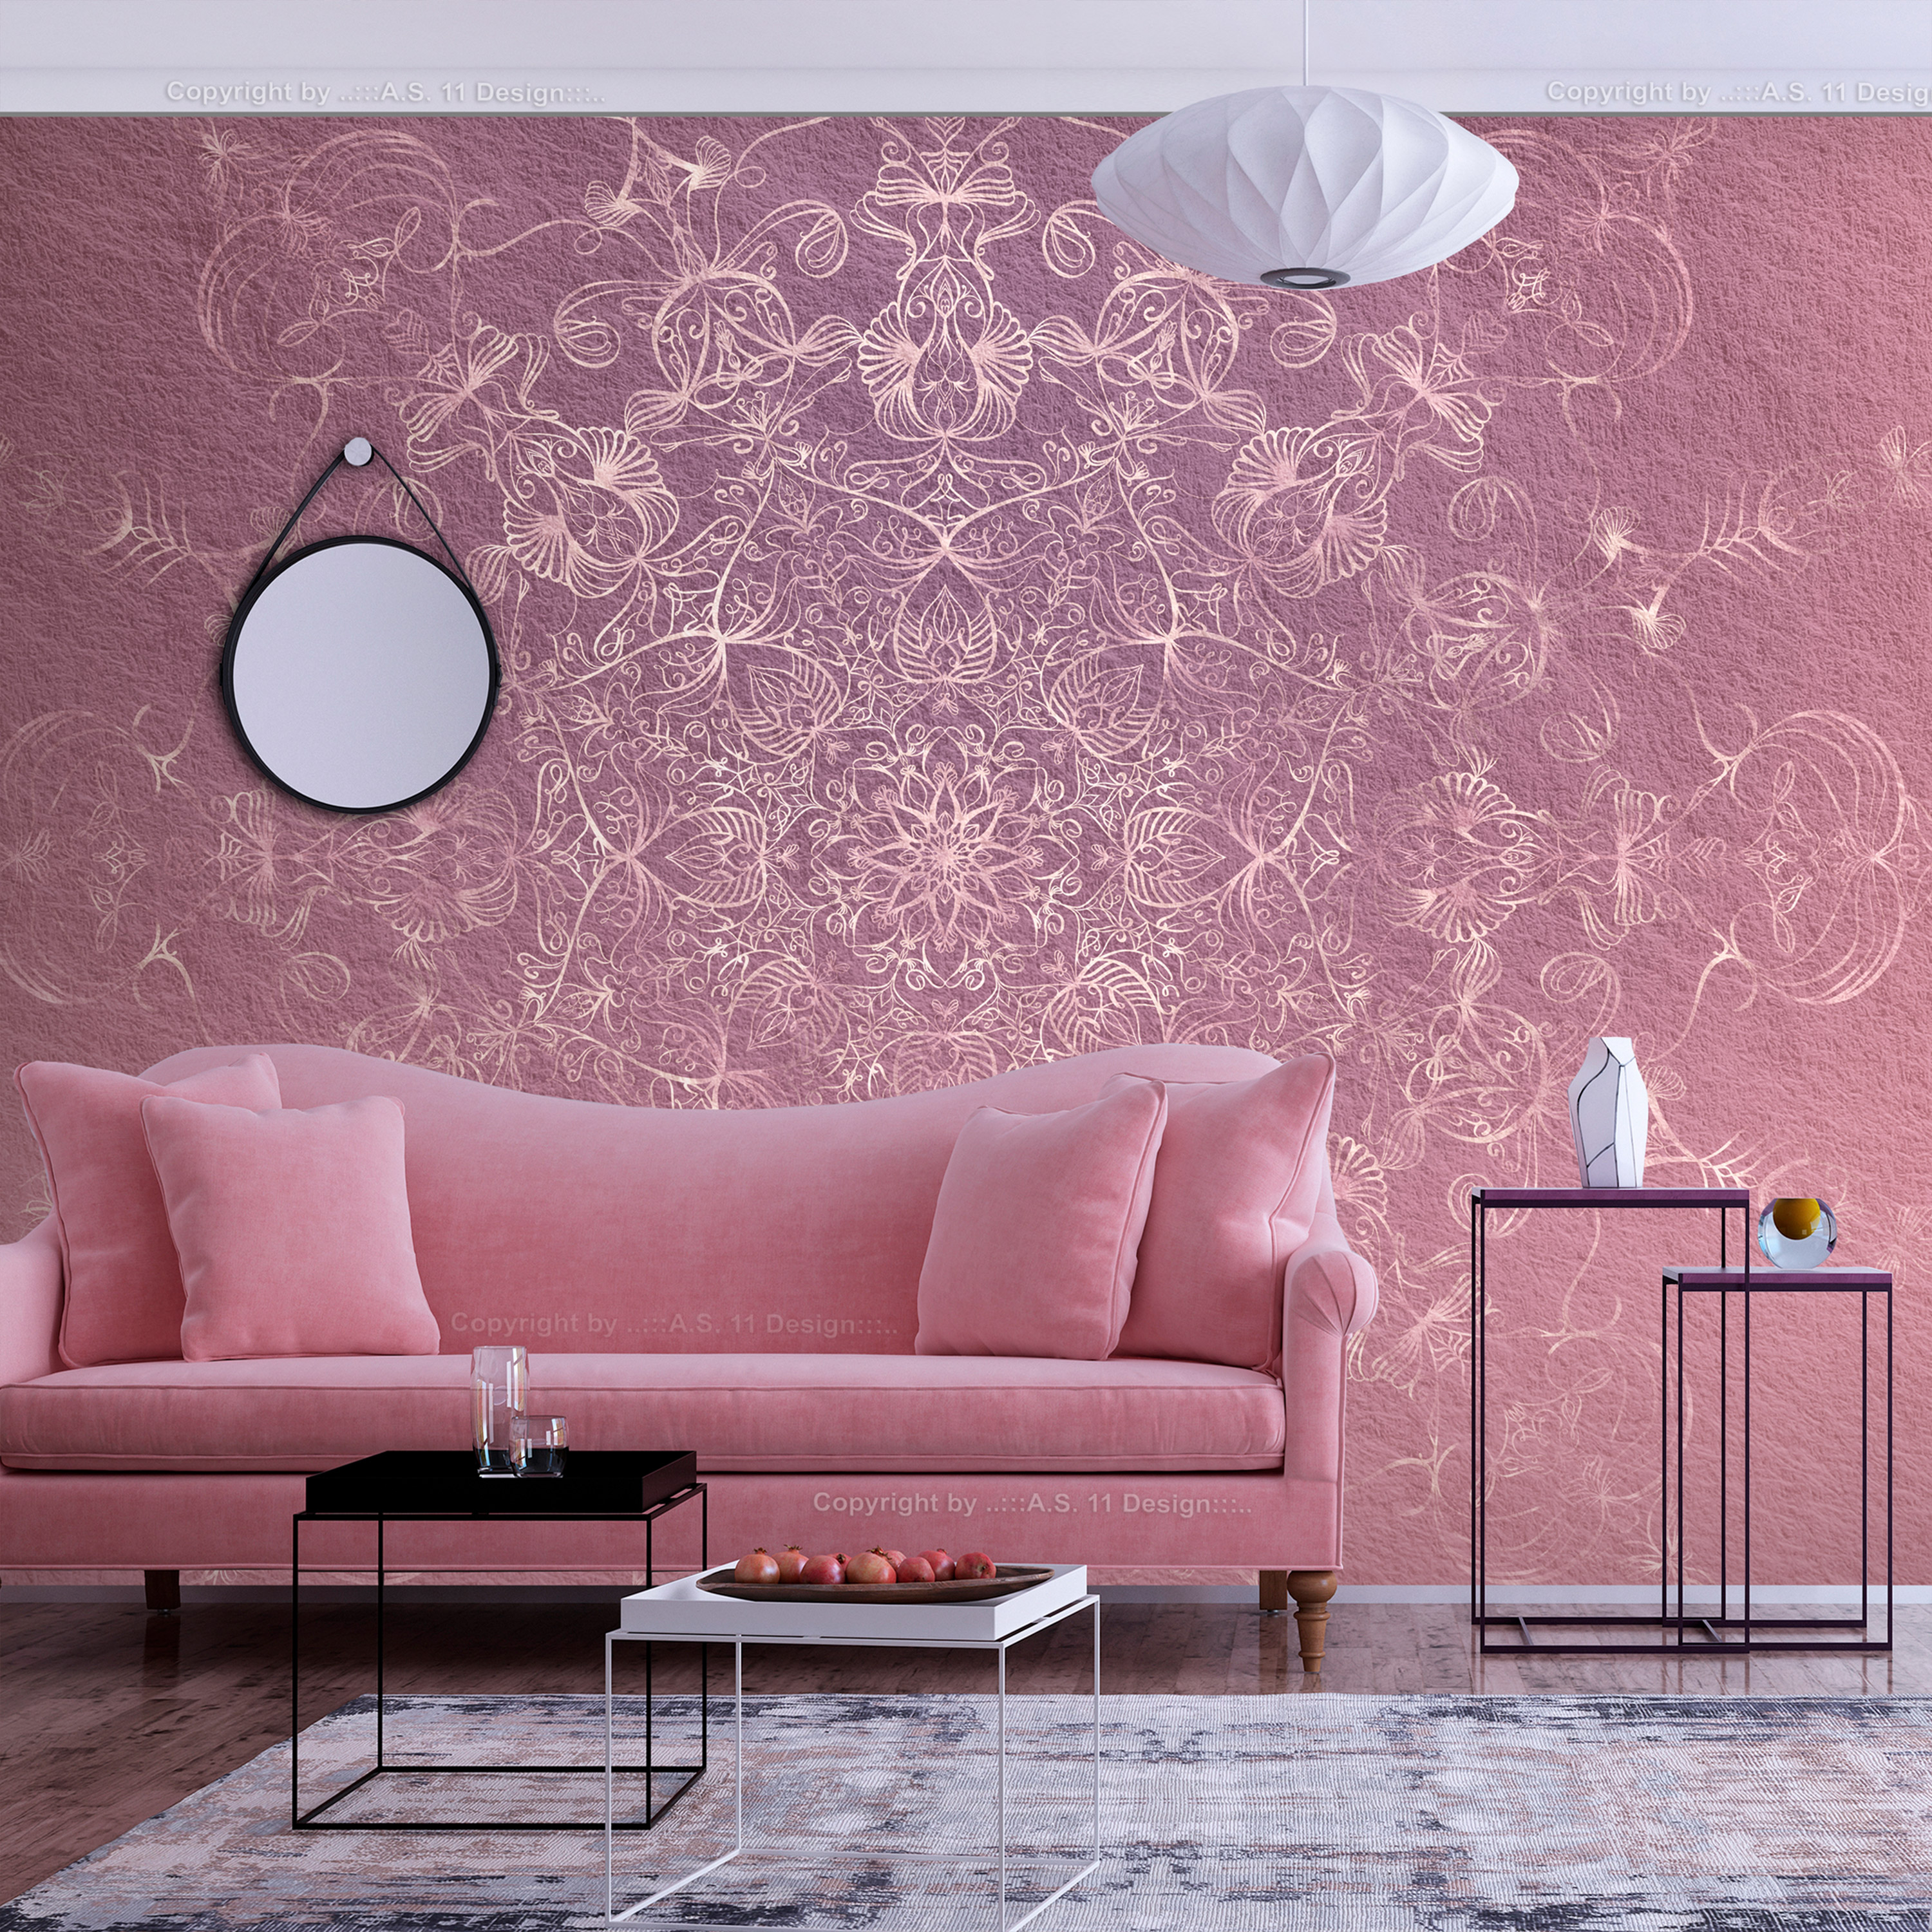 Self-adhesive Wallpaper - Calm in Pastels - 147x105